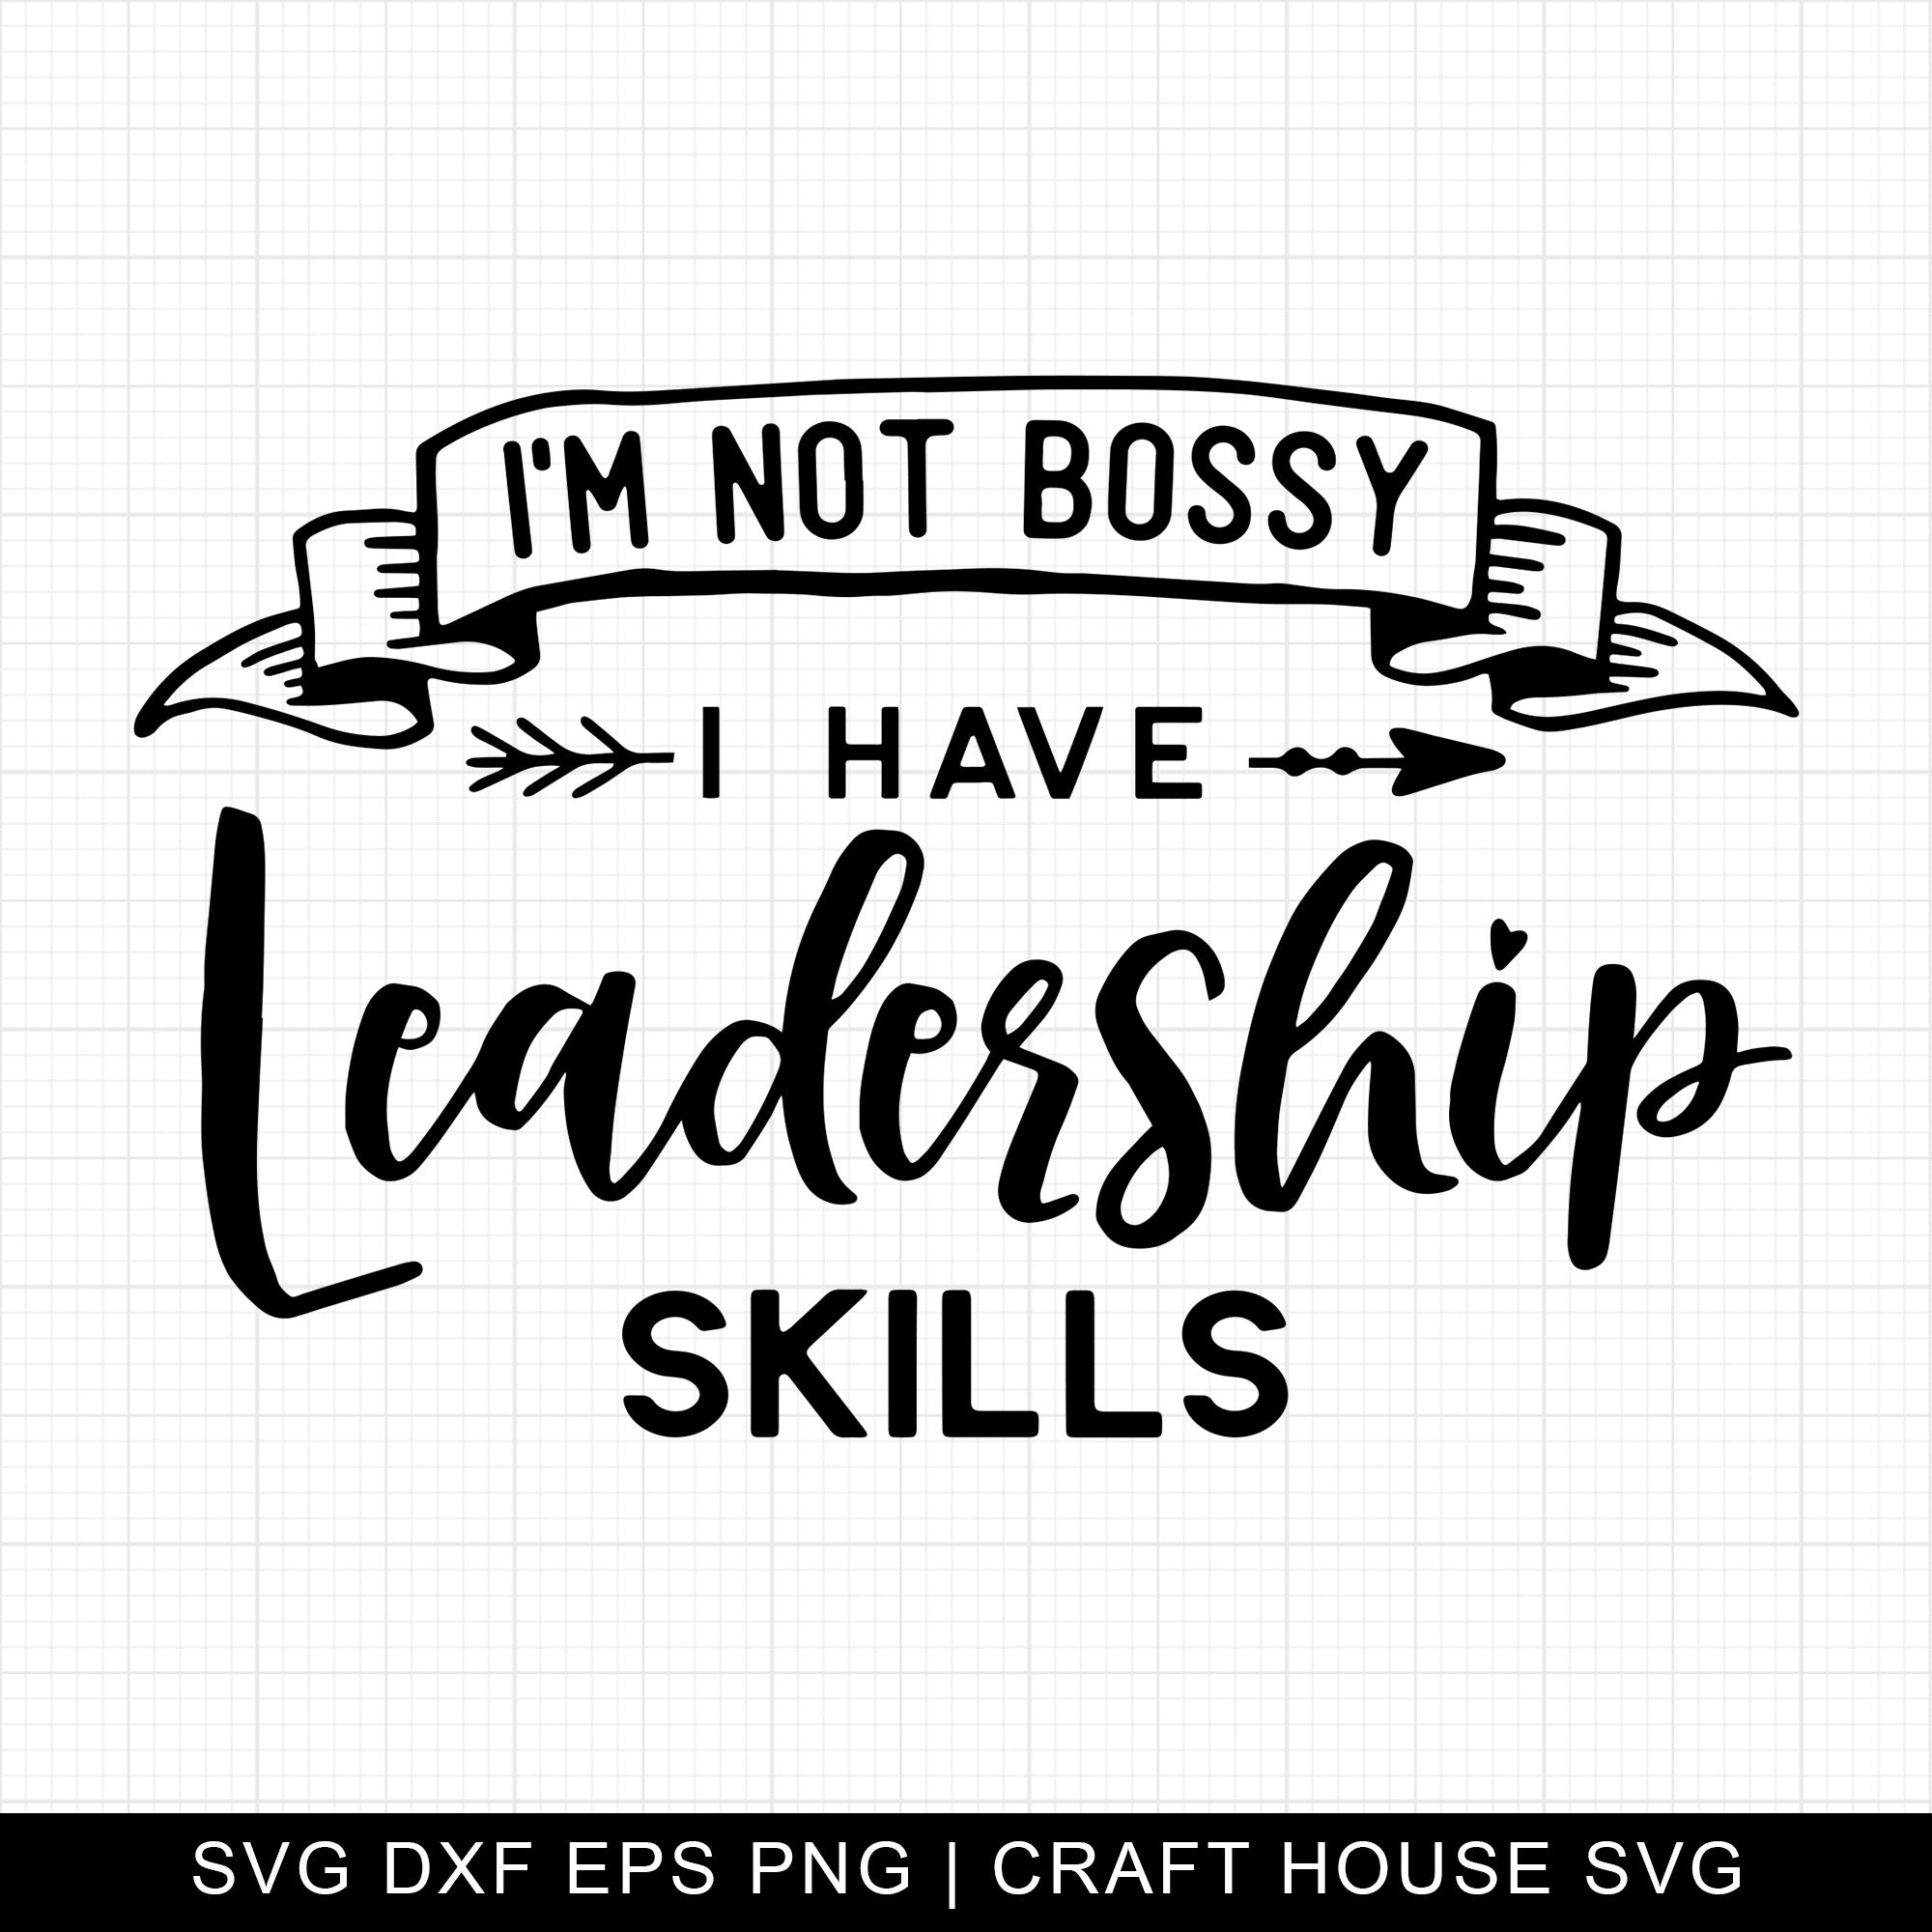 I'm not bossy I have leadership skills SVG | M10F7